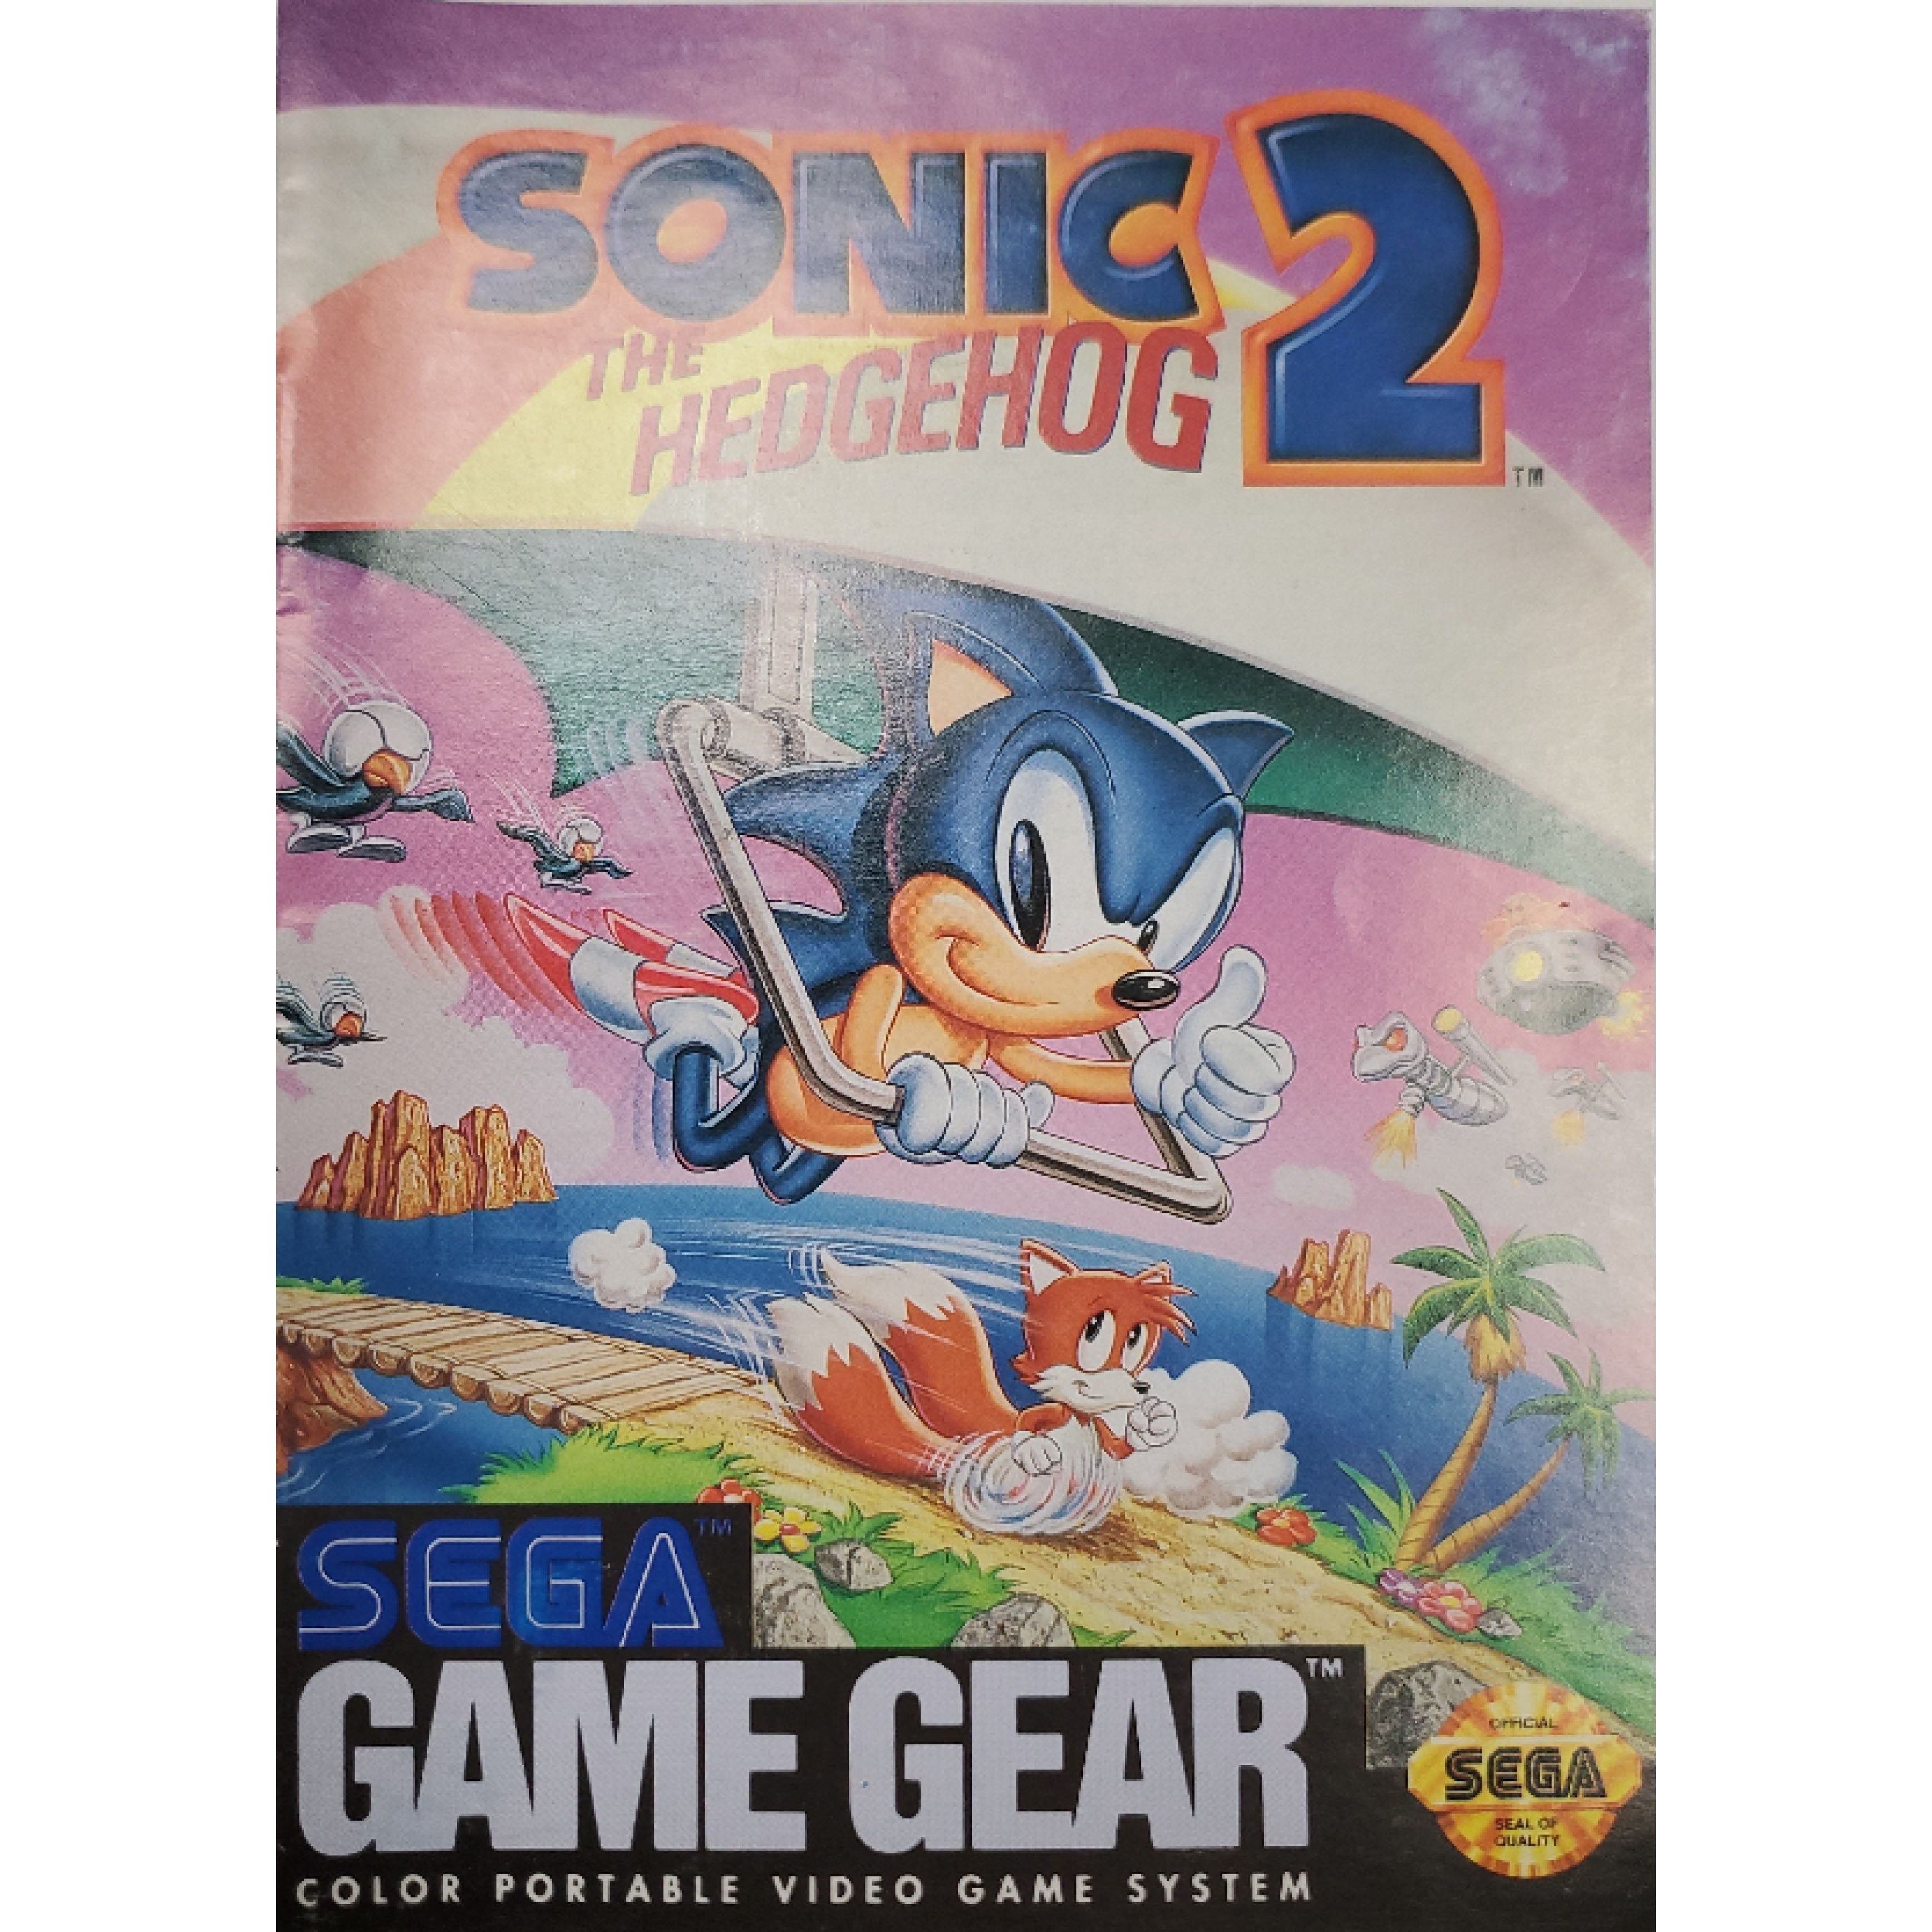 GameGear - Sonic the Hedgehog 2 (Manual)